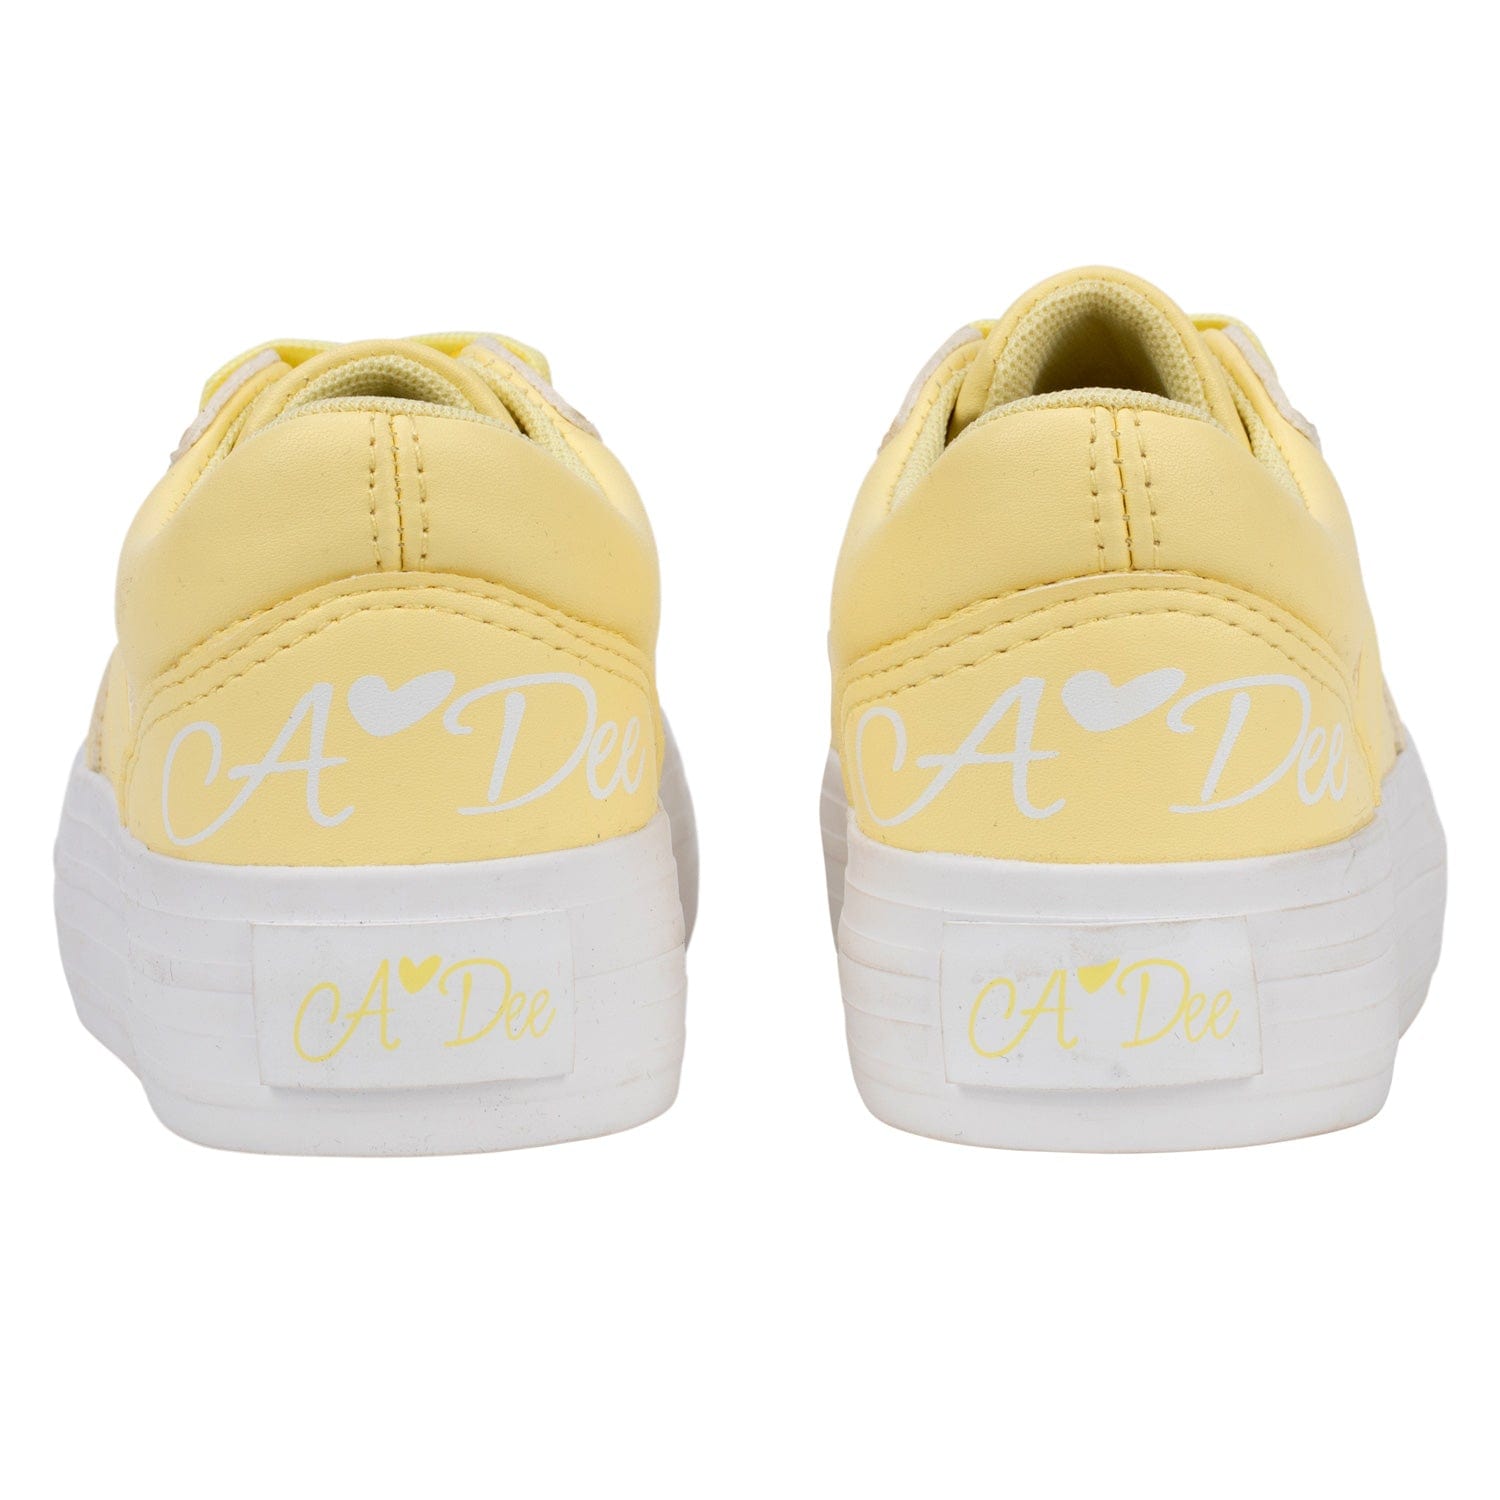 A-Dee Shoes S241905-1001 Adee Girls Patty Lemon Cake Platform Trainer